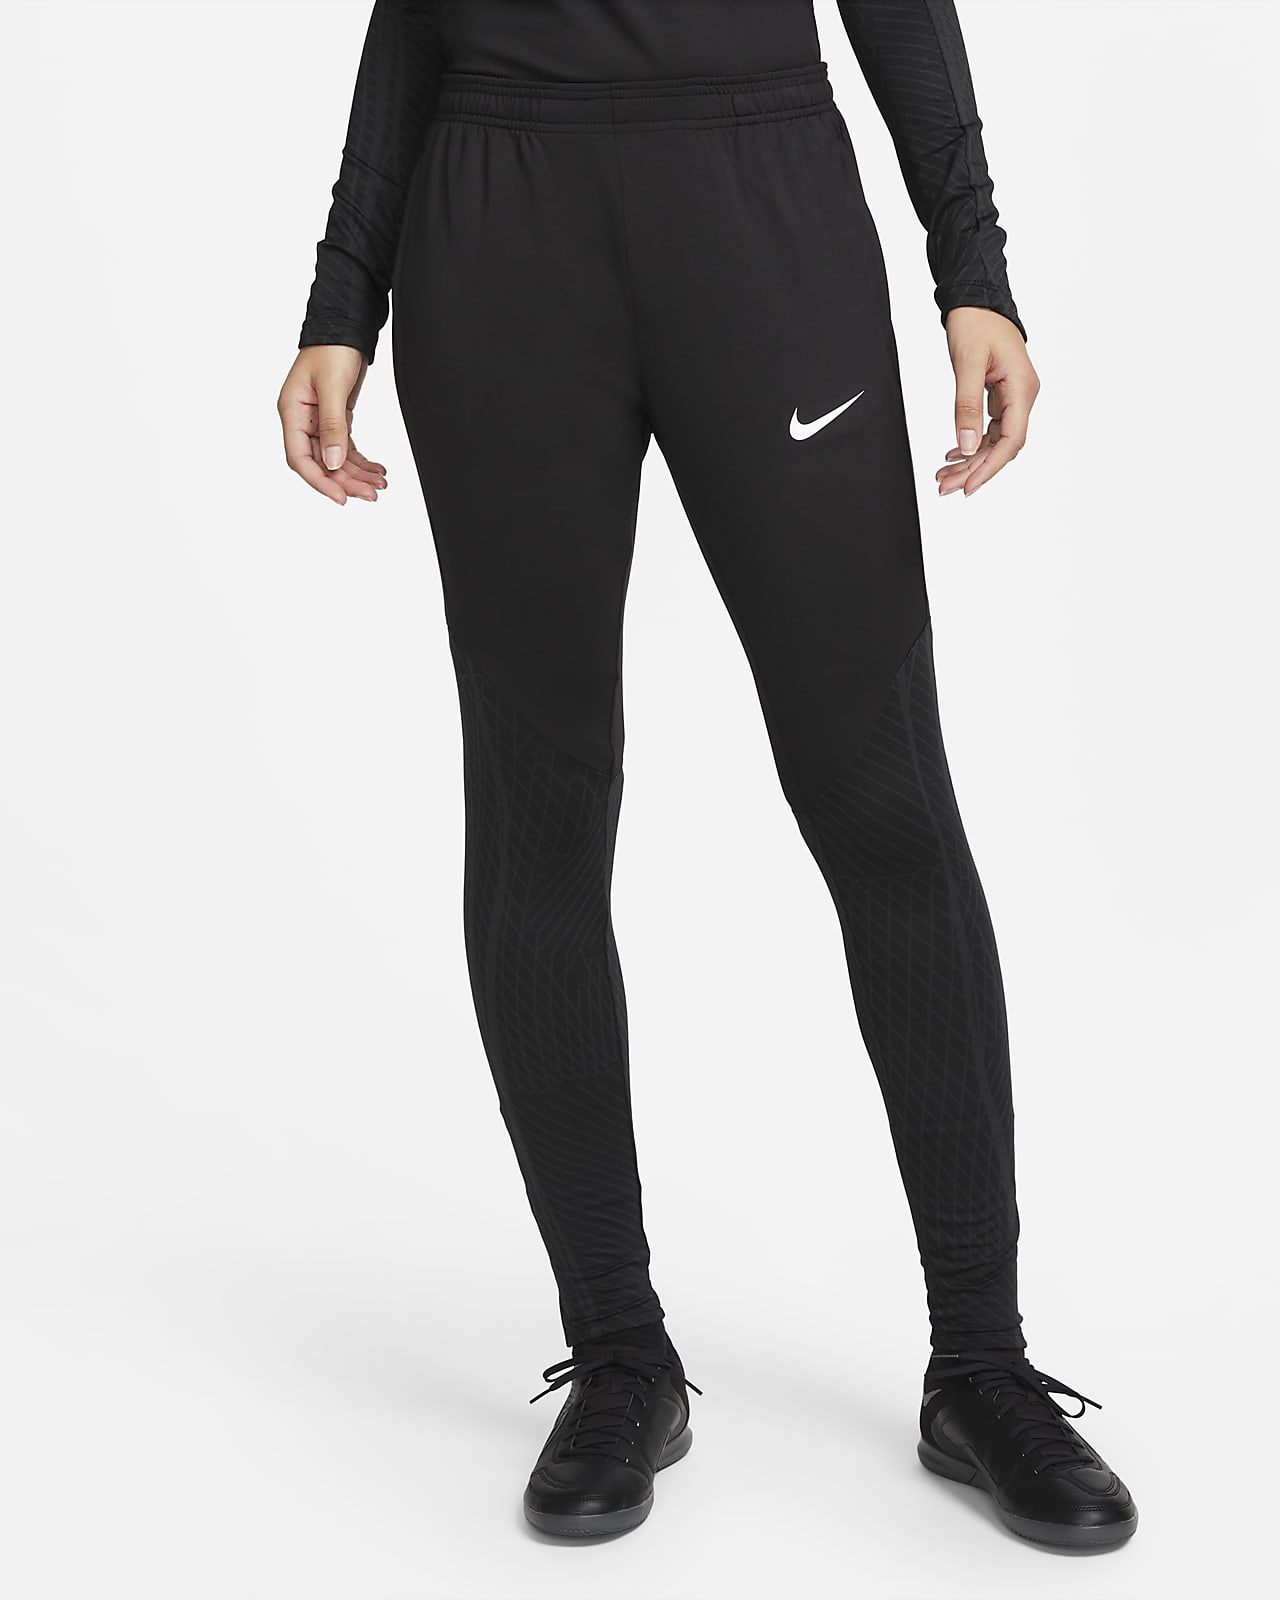 Pants de para mujer Nike Strike. Nike.com